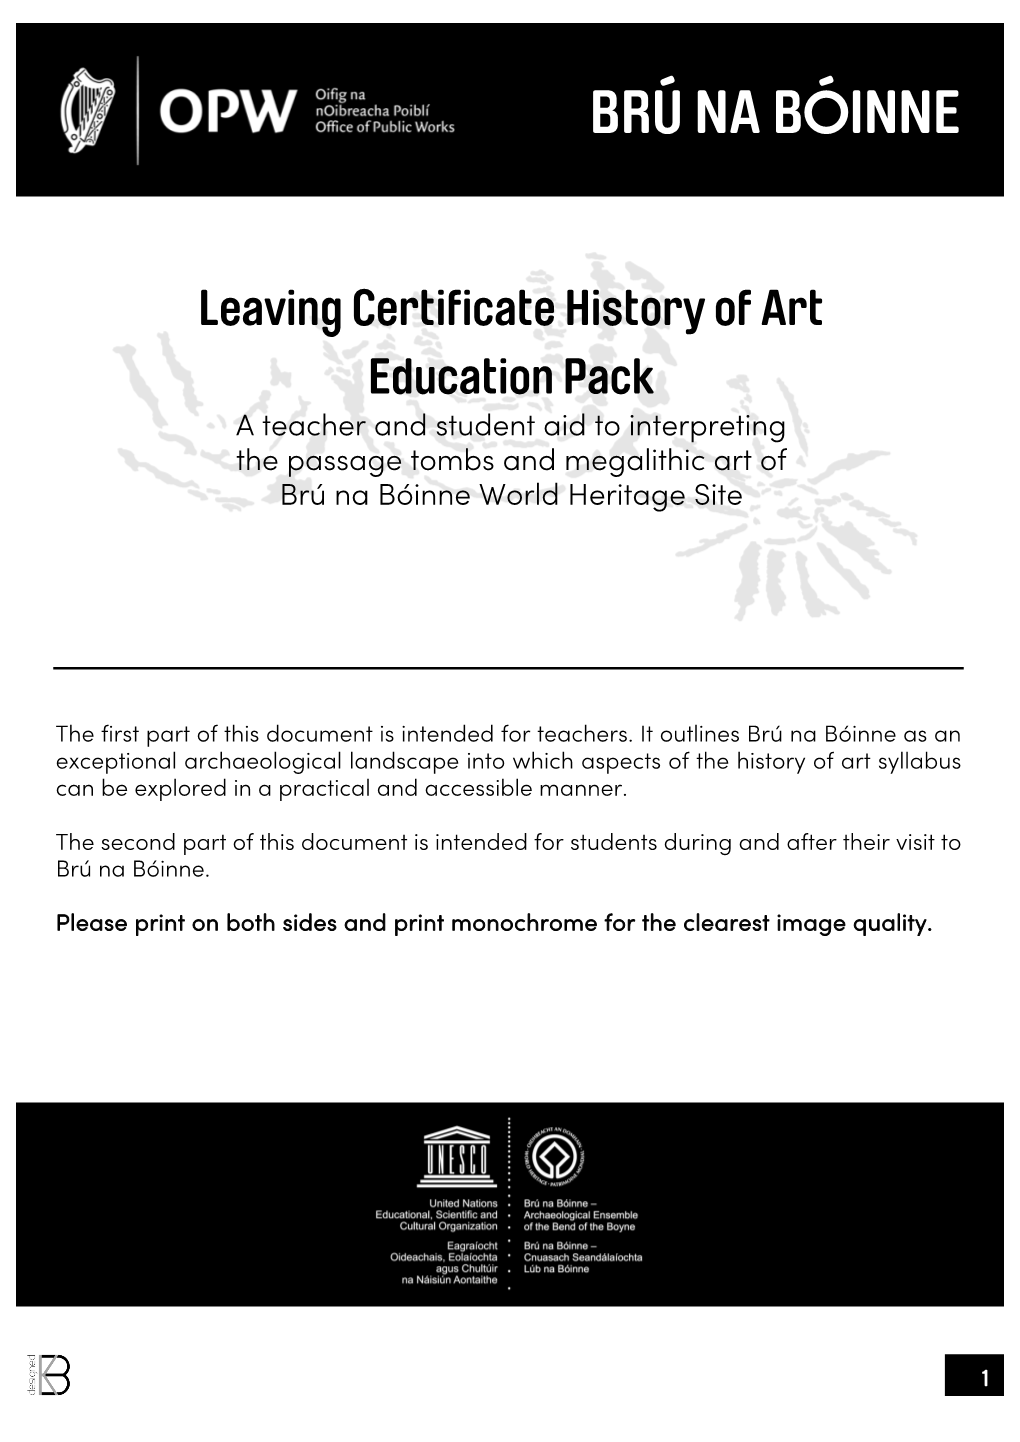 Art History Leaving Certificate